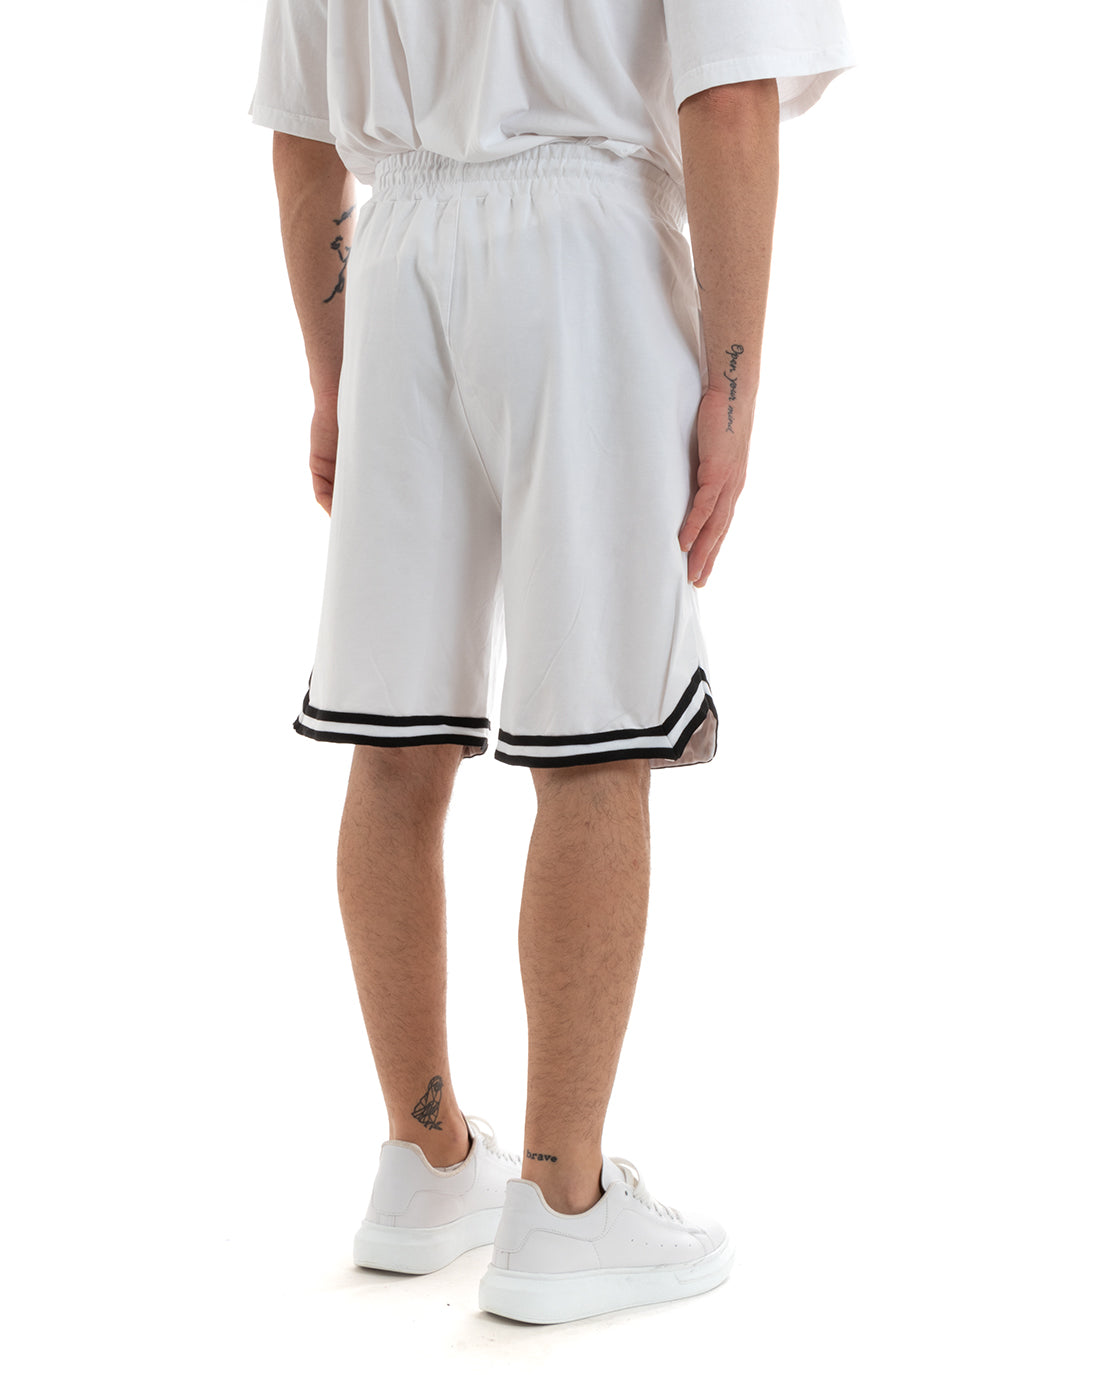 Completo Set Coordinato Uomo Cotone Viscosa T-Shirt Bermuda Outfit Bianco GIOSAL-OU2310A